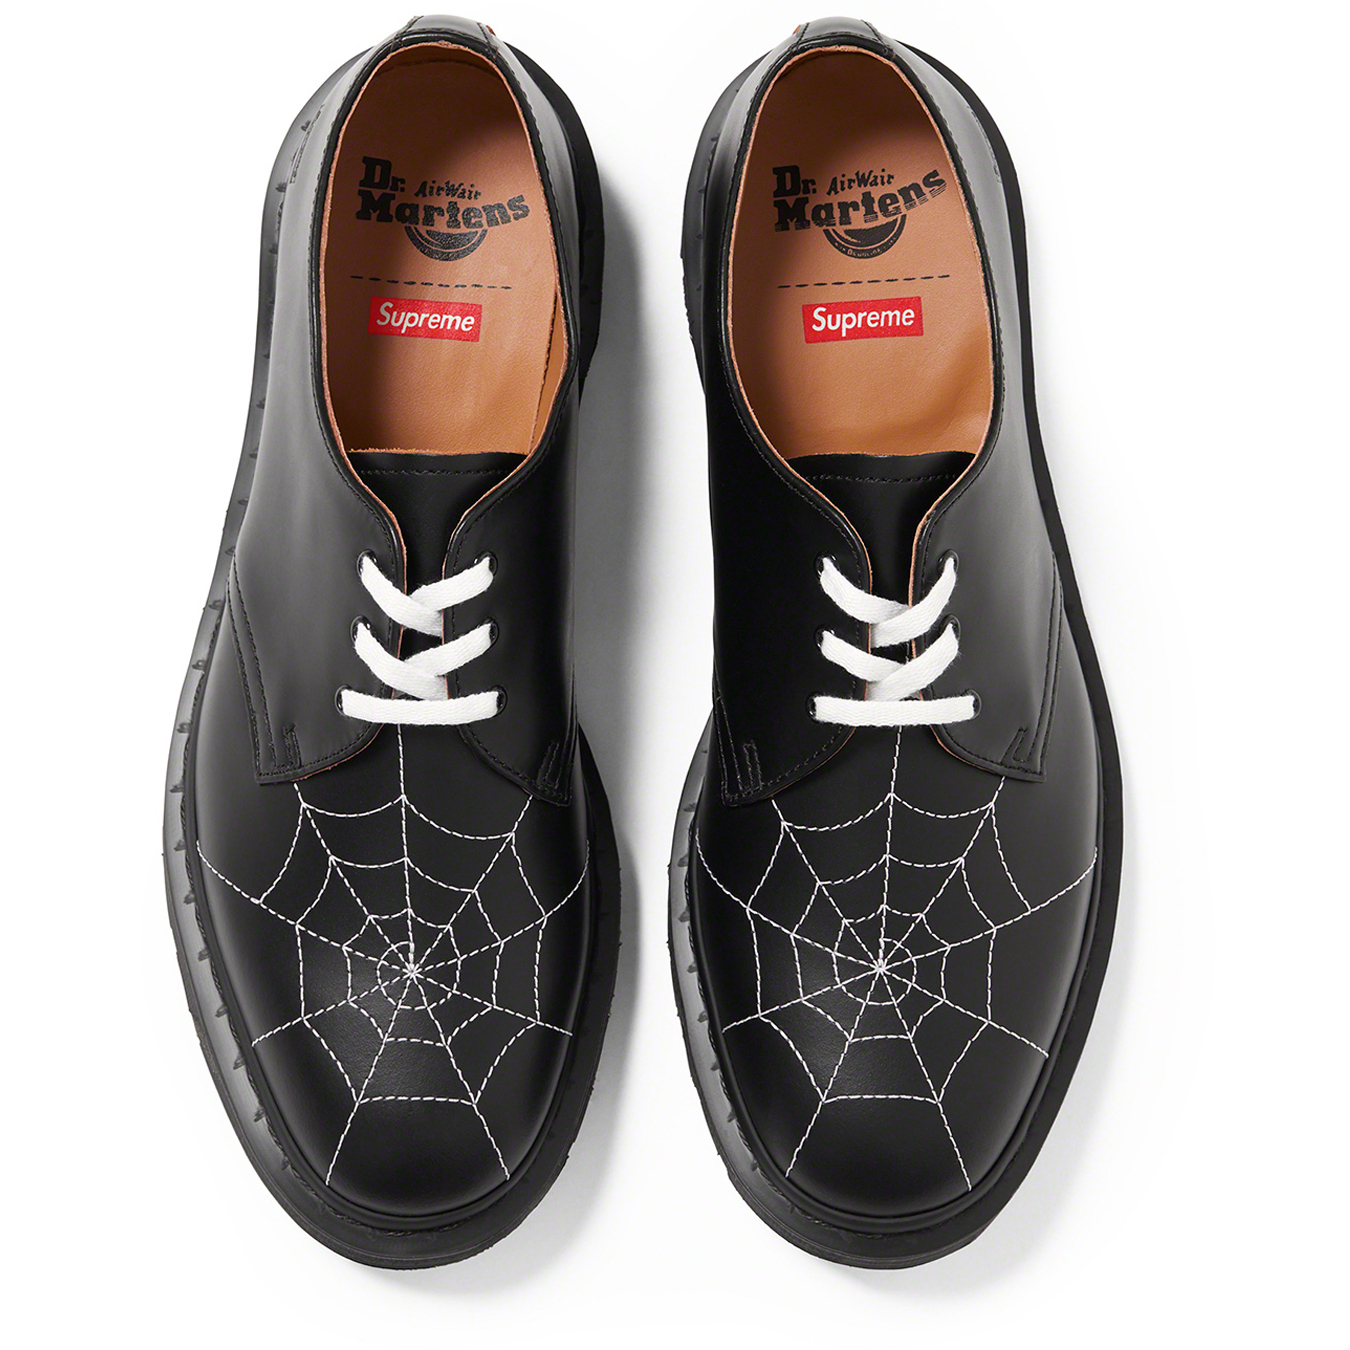 Supreme®/Dr. Martens® Spiderweb 3-Eye Shoe - Supreme Community